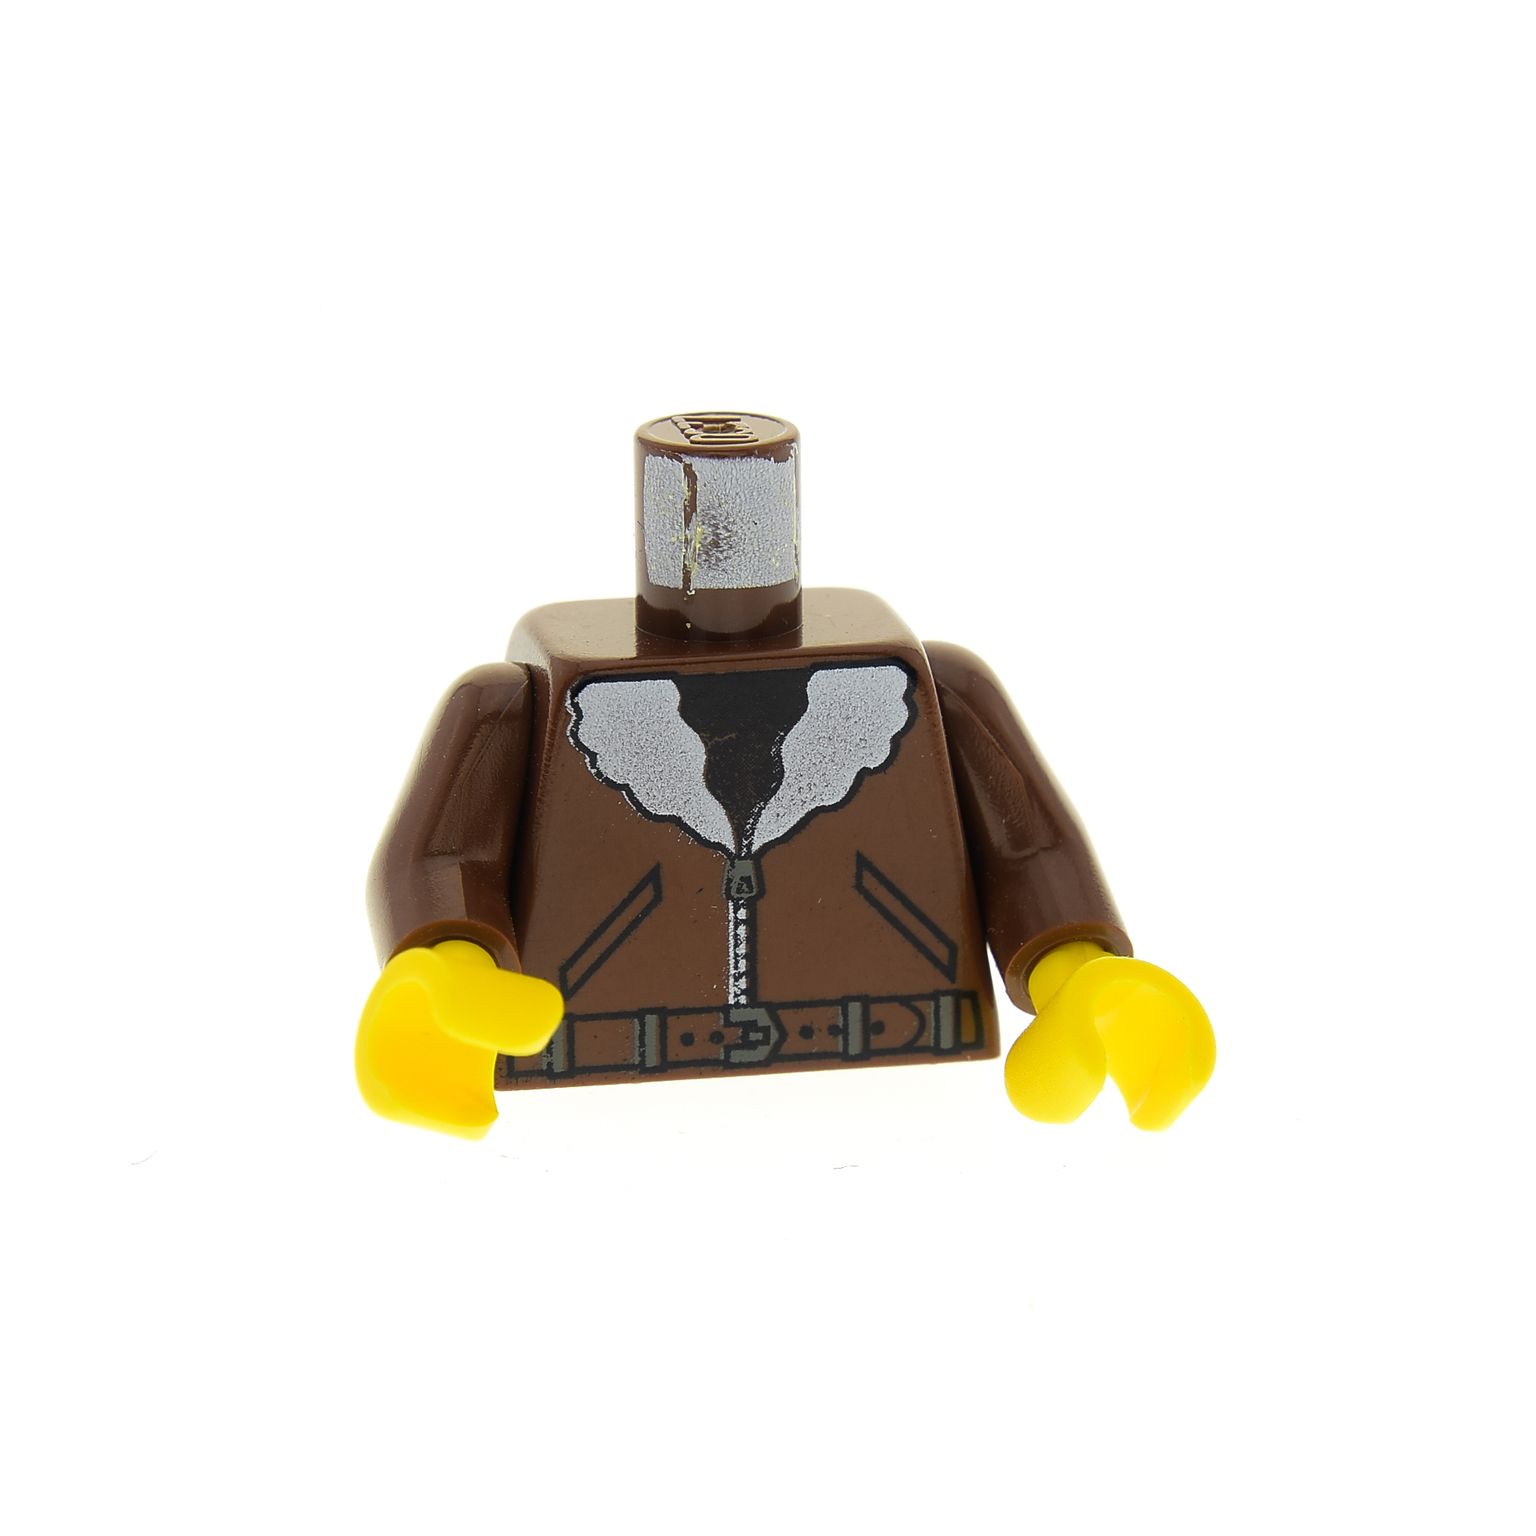 1x Lego Figur Wüste Harry Cane Torso braun Jacke Pelz adv009 Set 5909 973pa5c01 